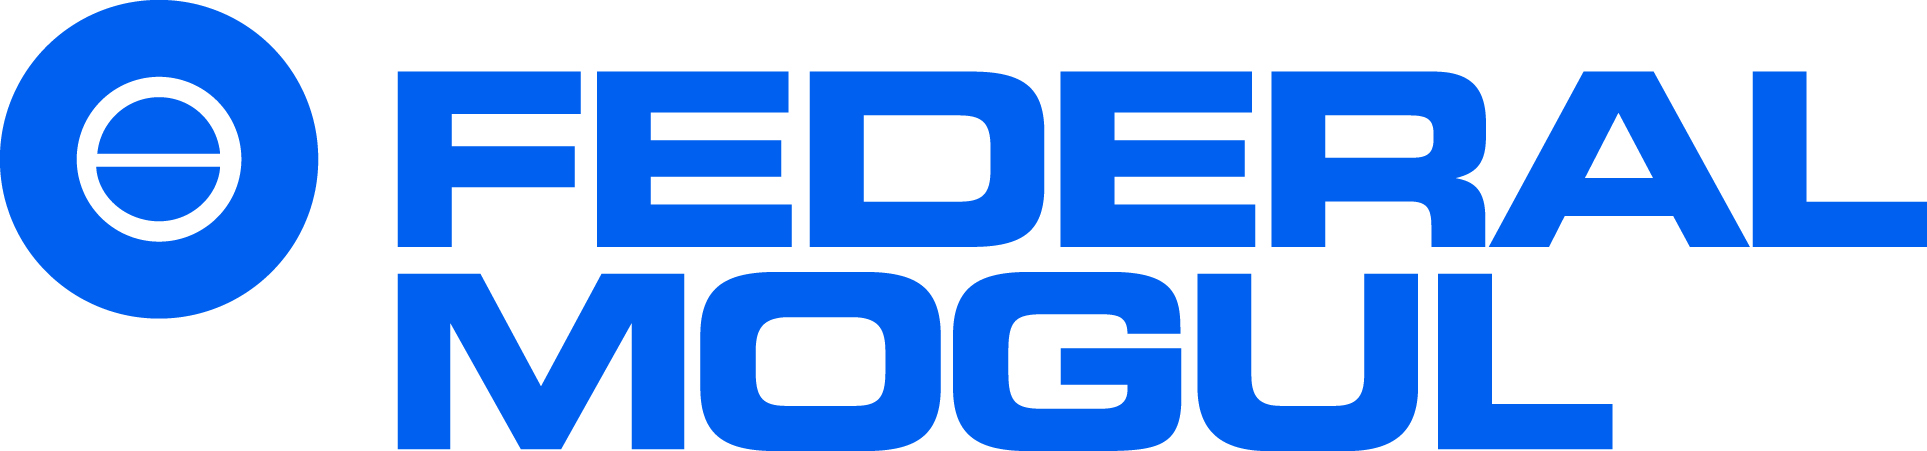 VINTAGE GARAGE - logo Federal Mogul